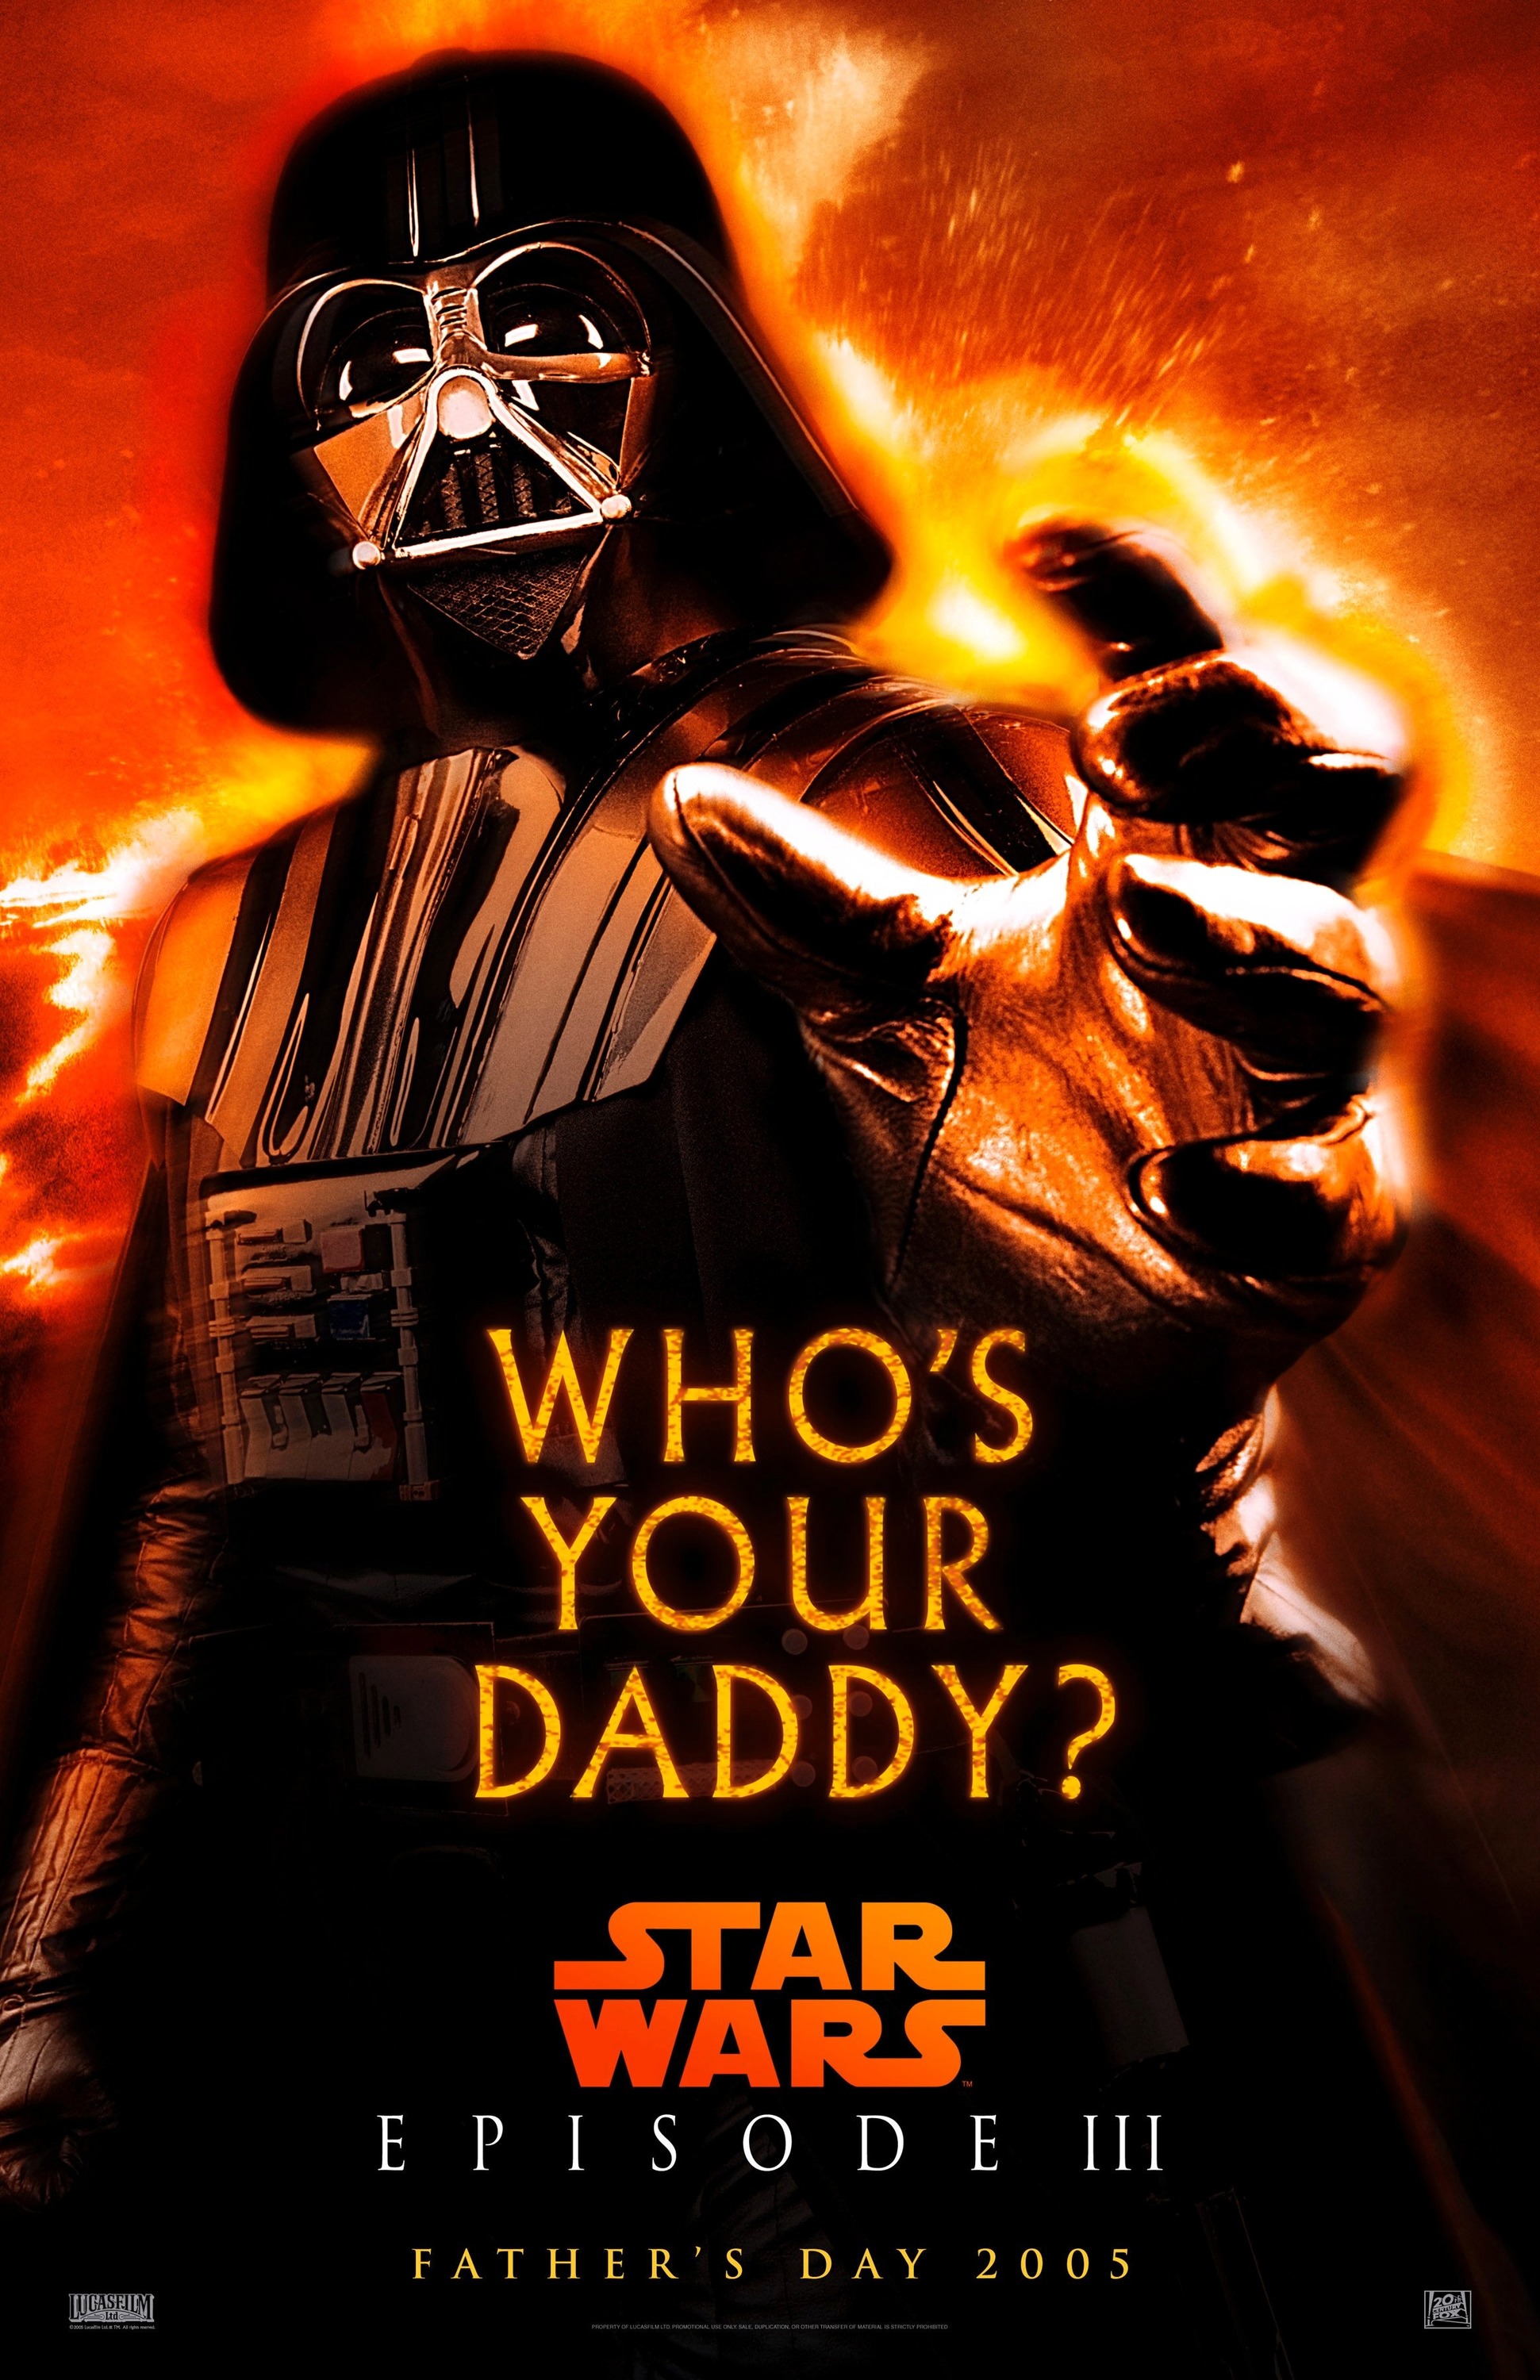 Star Wars Episode Iii Revenge Of The Sith Of Mega Sized Movie Poster Image Imp Awards